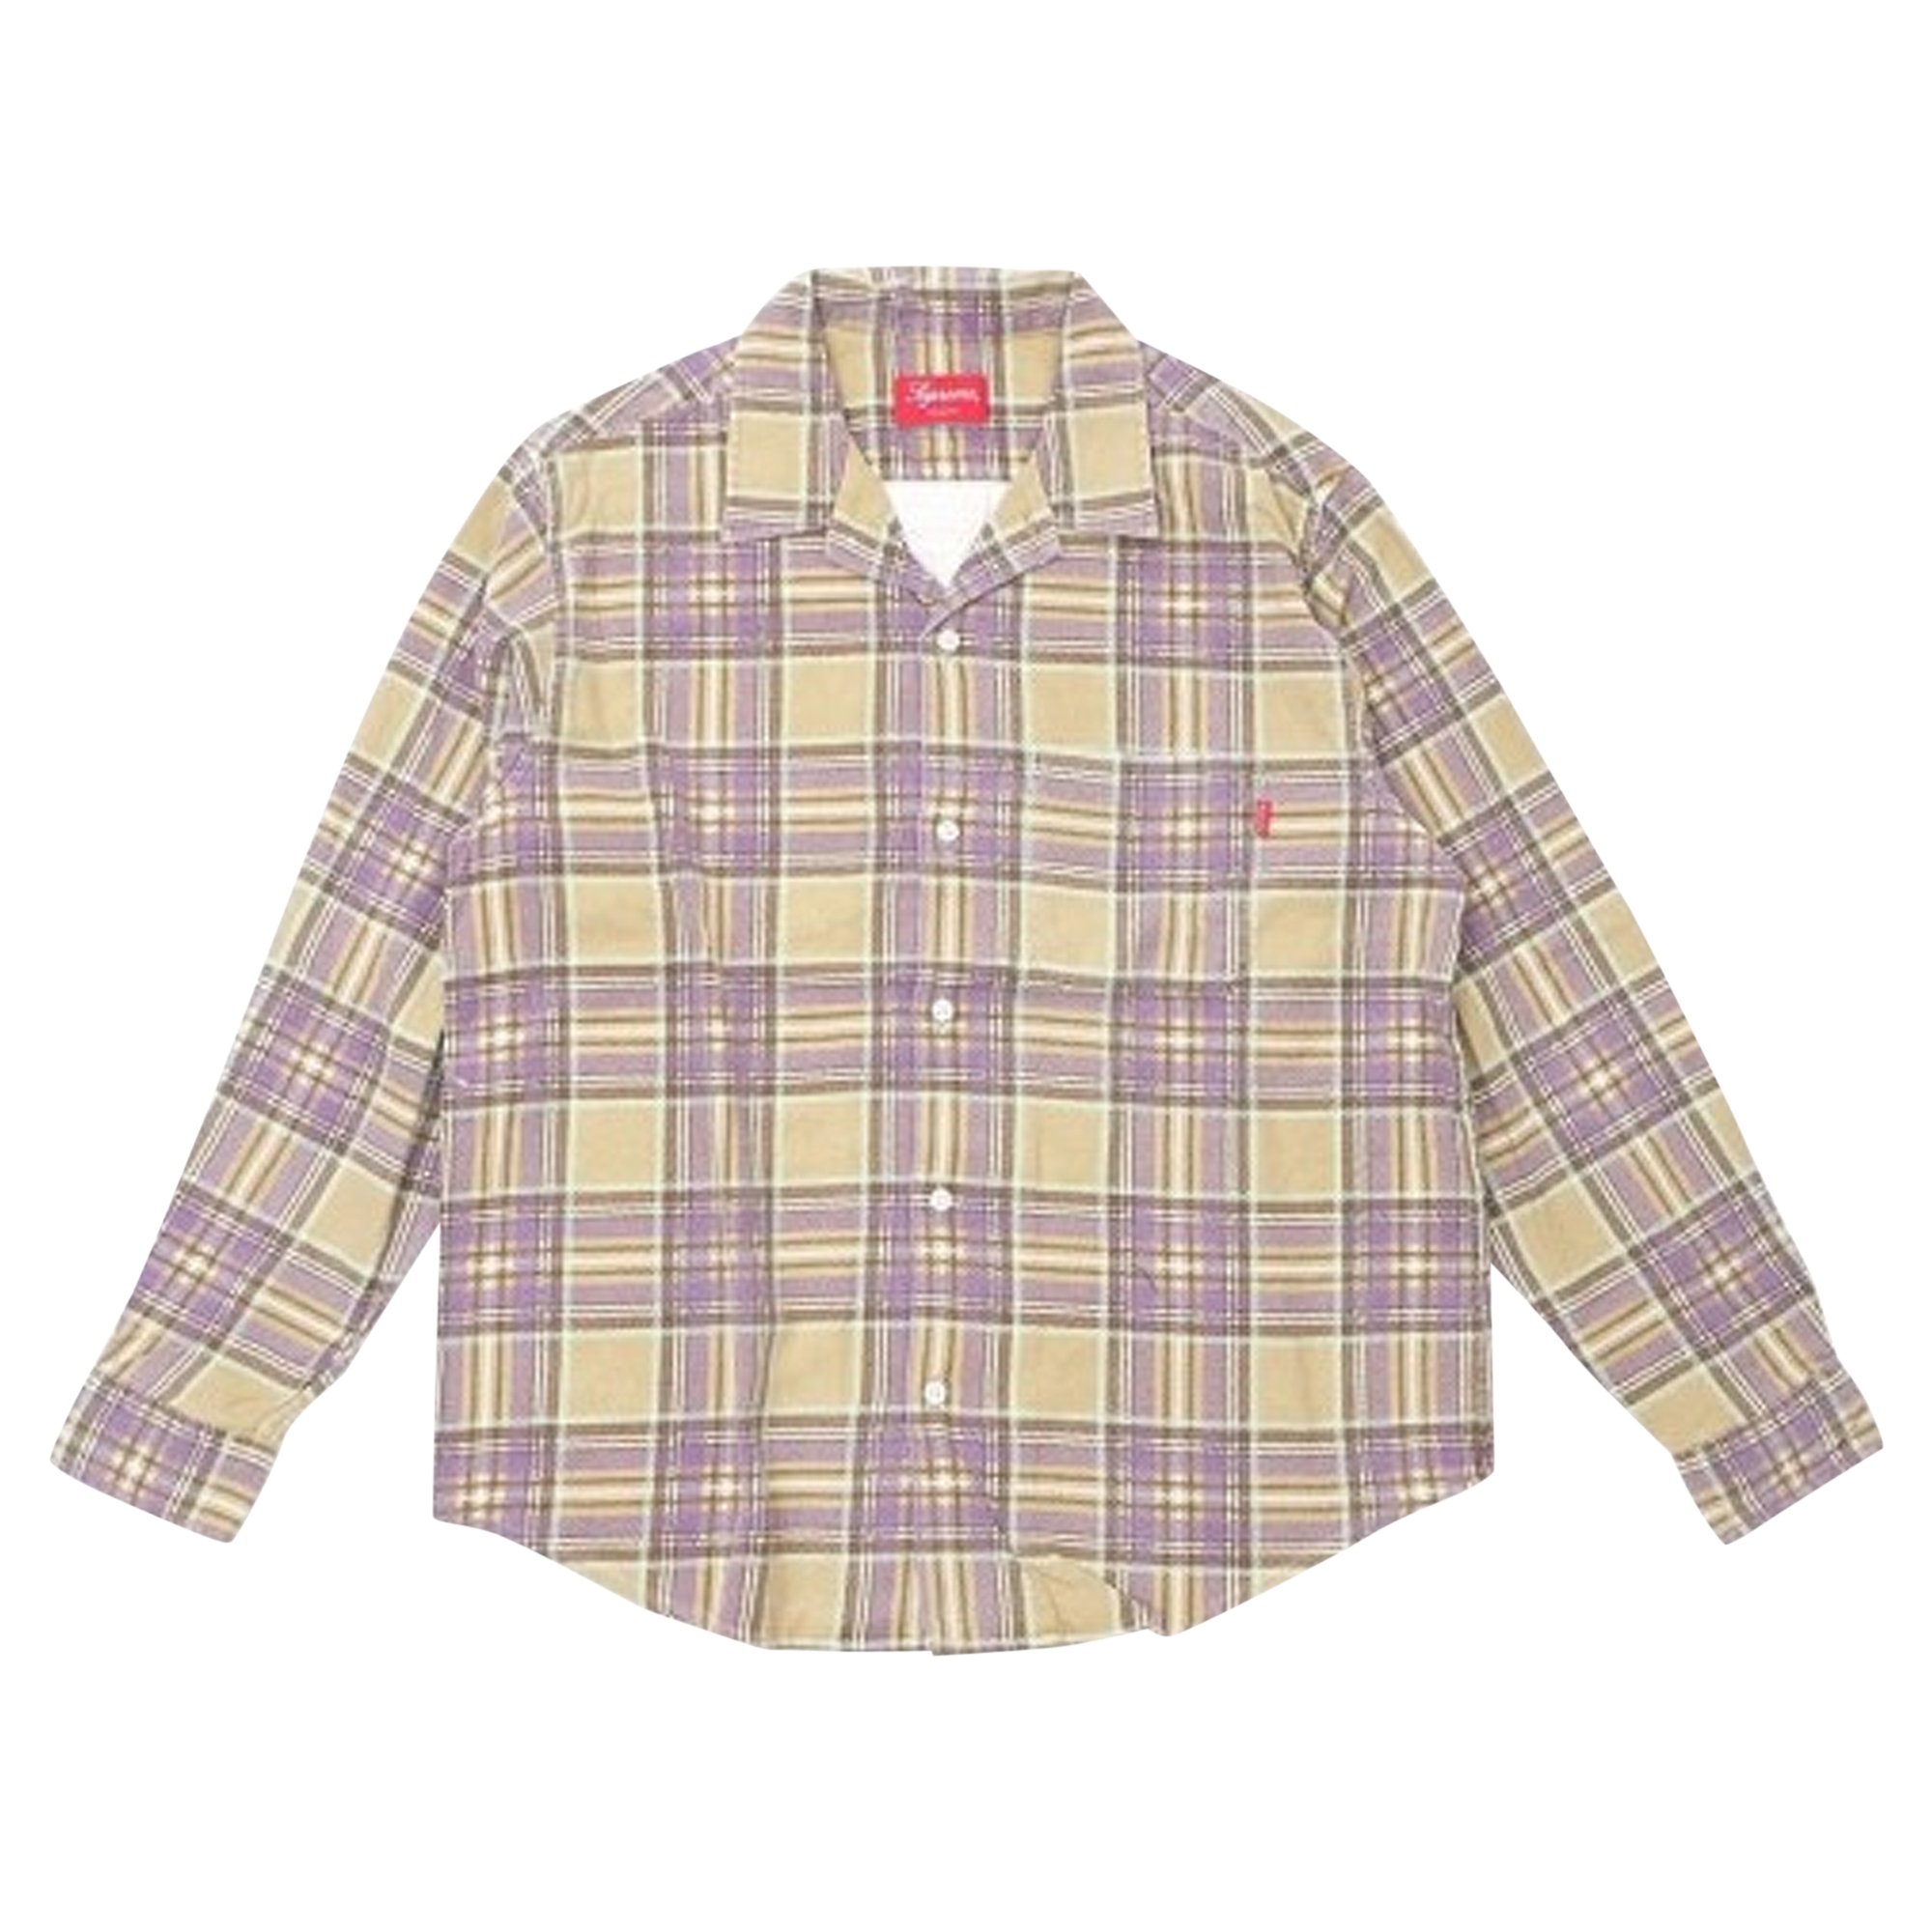 Buy Supreme Printed Plaid Shirt 'Tan' - SS20S29 TAN | GOAT NL